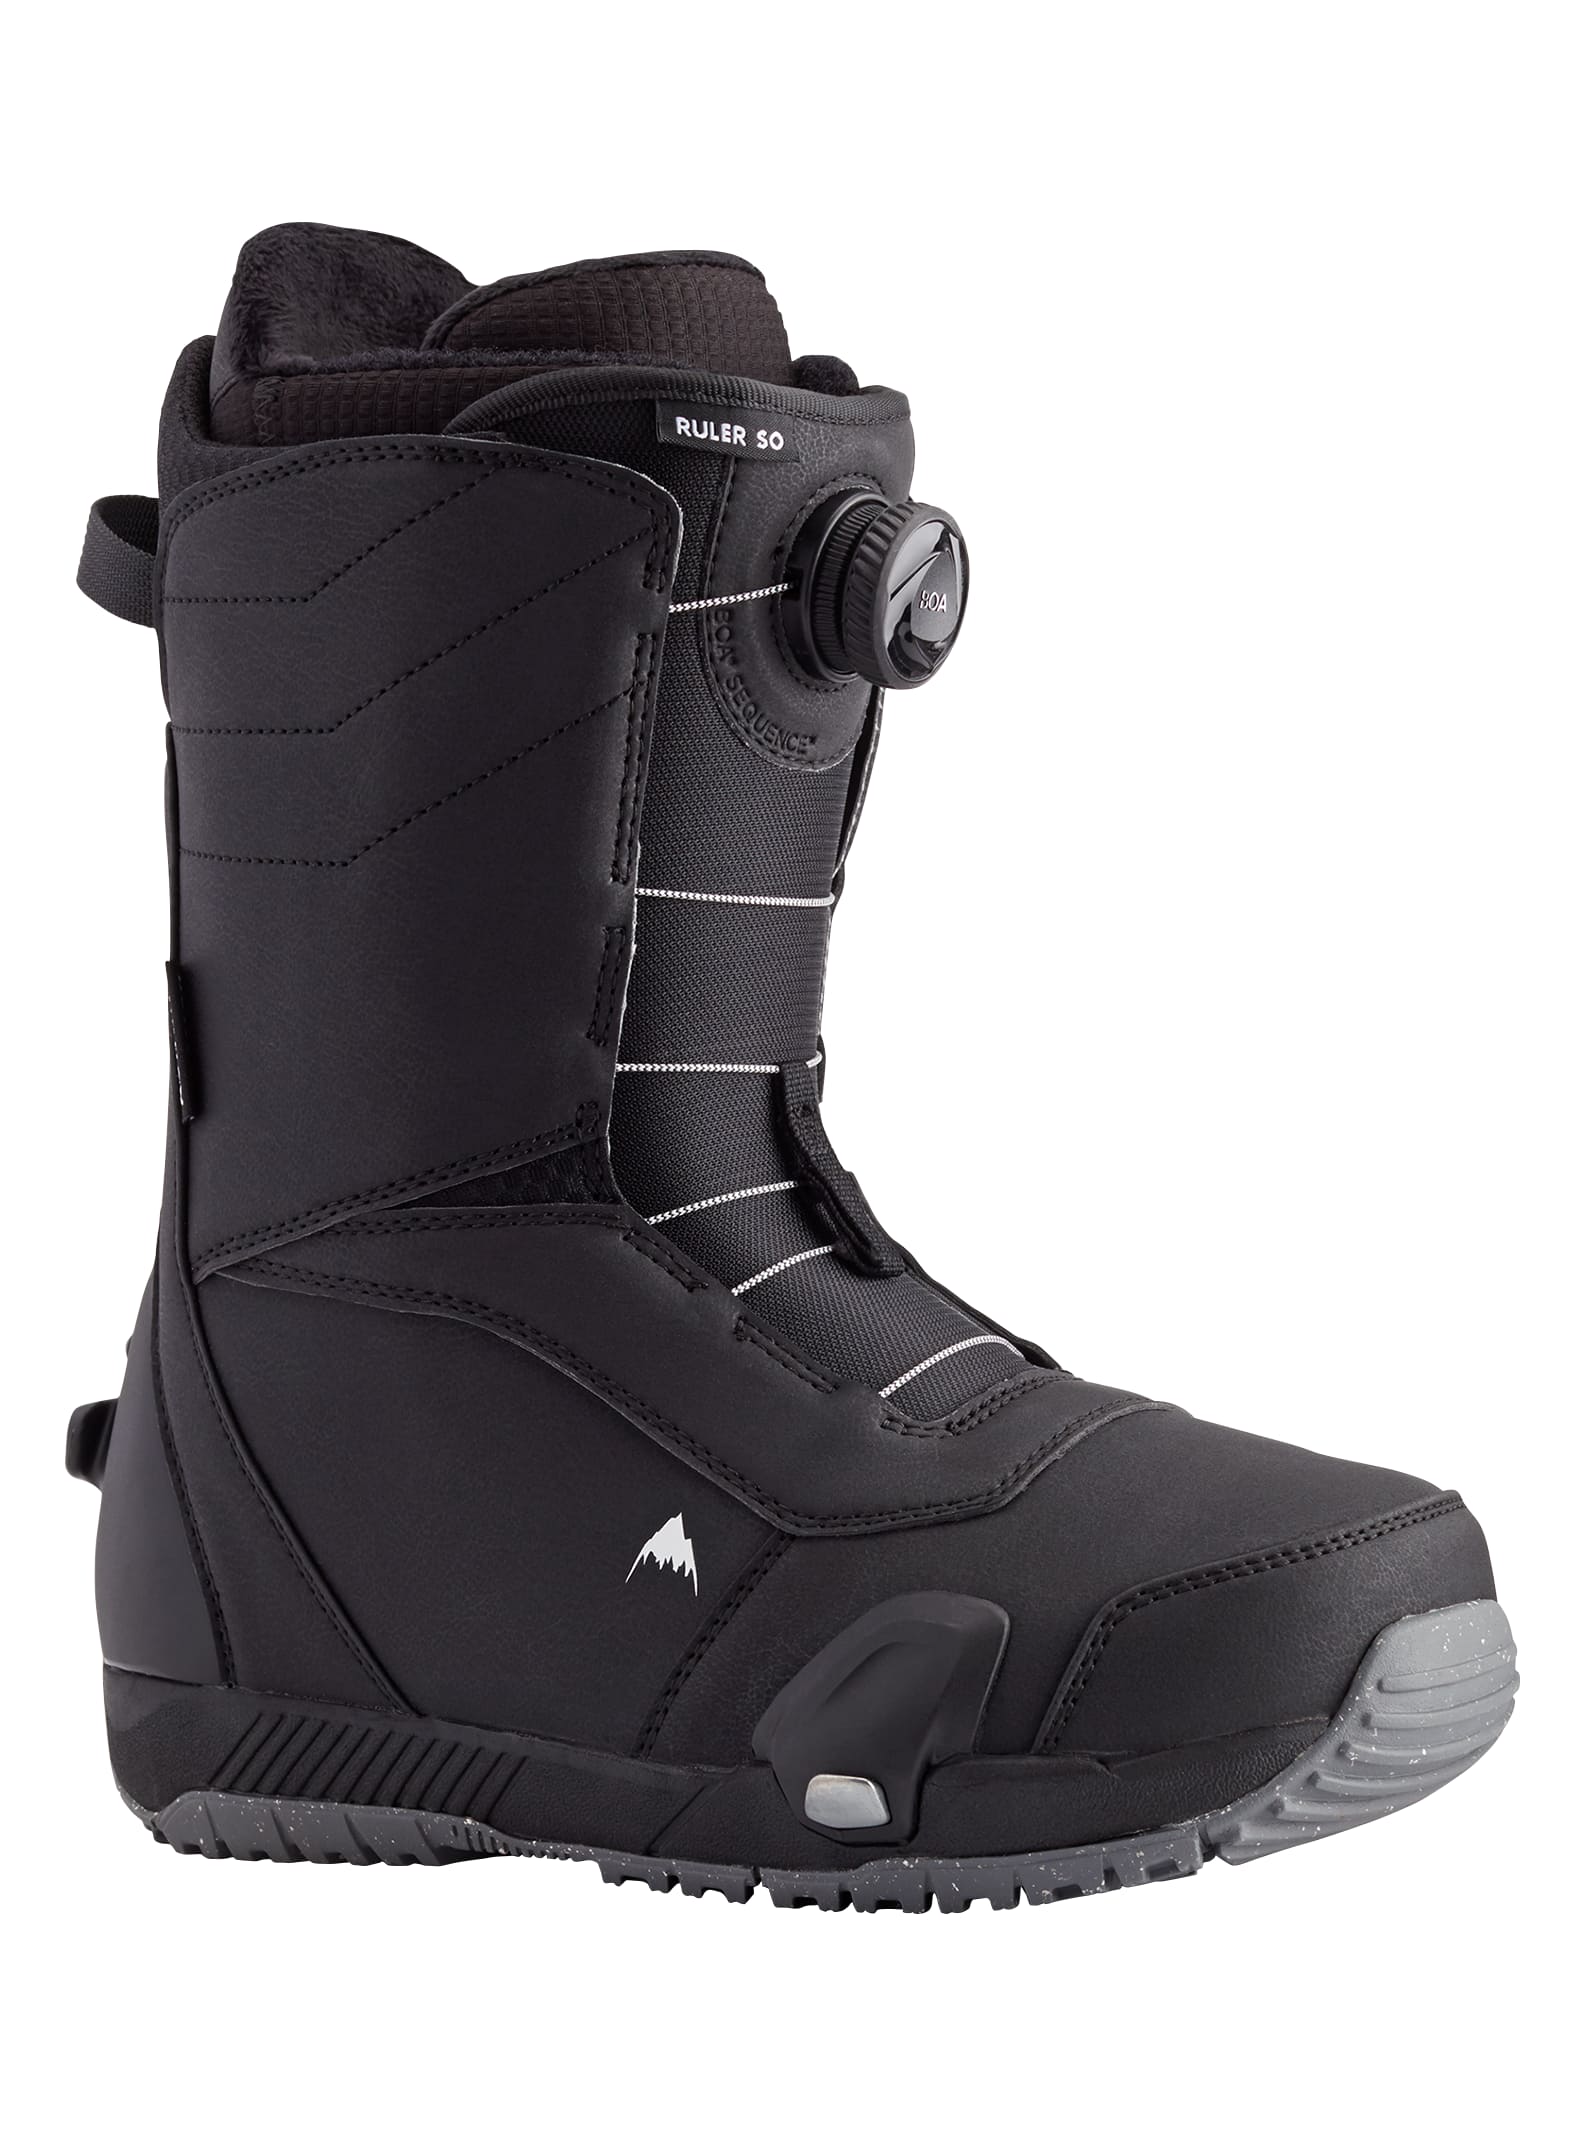 Step On® Snowboard Boots & Snowboard Bindings | Burton Snowboards AT